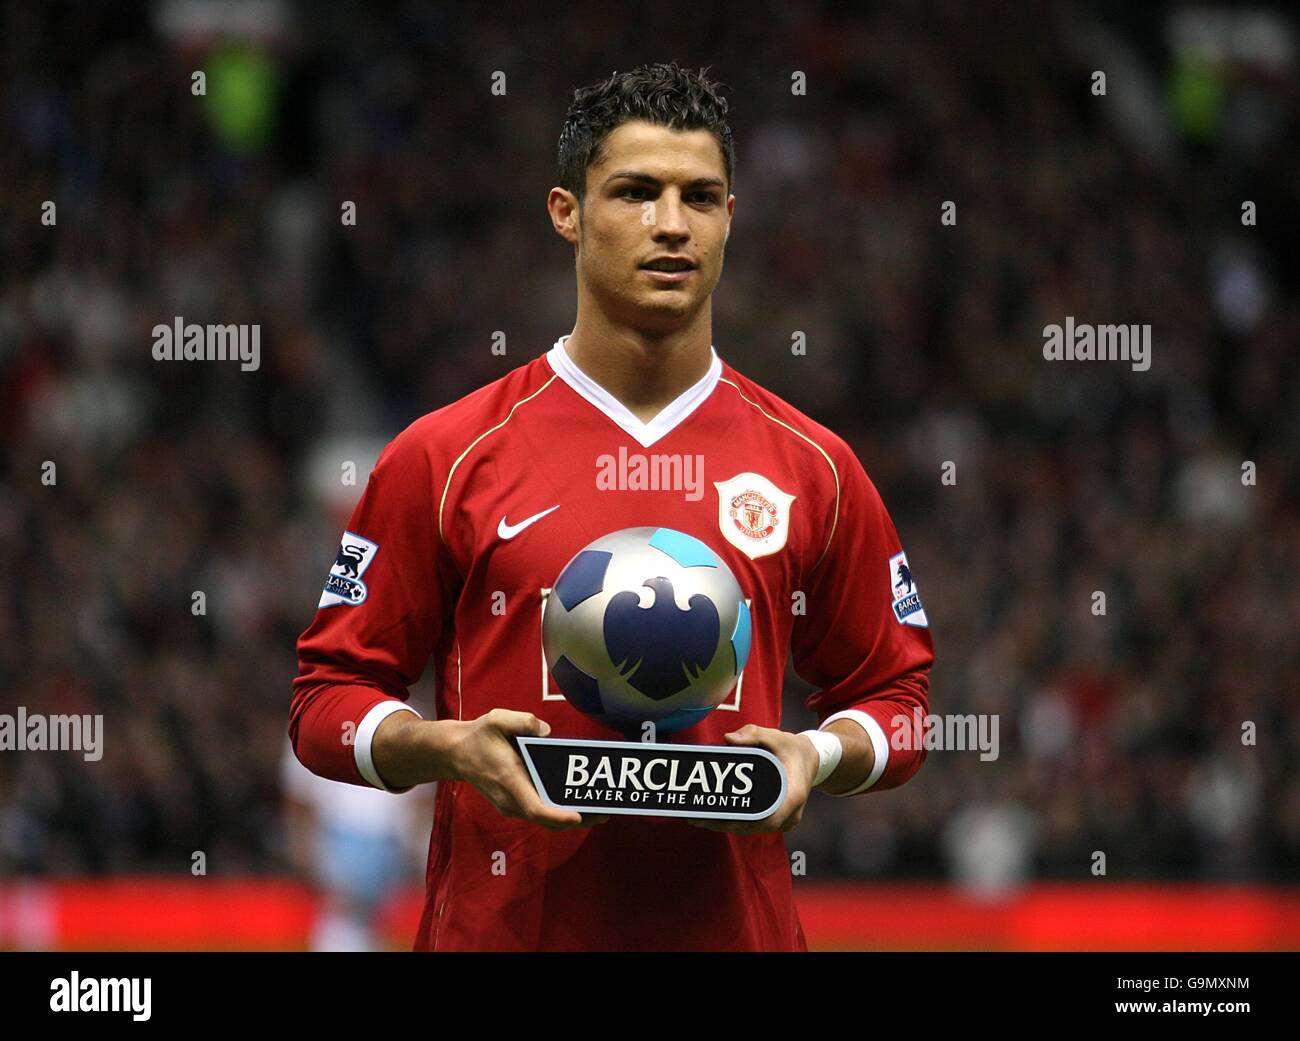 Football - FA Barclays Premiership - Manchester United / Aston Villa - Old Trafford.Cristiano Ronaldo de Manchester United avec son Barclays Player of the Month Award Banque D'Images